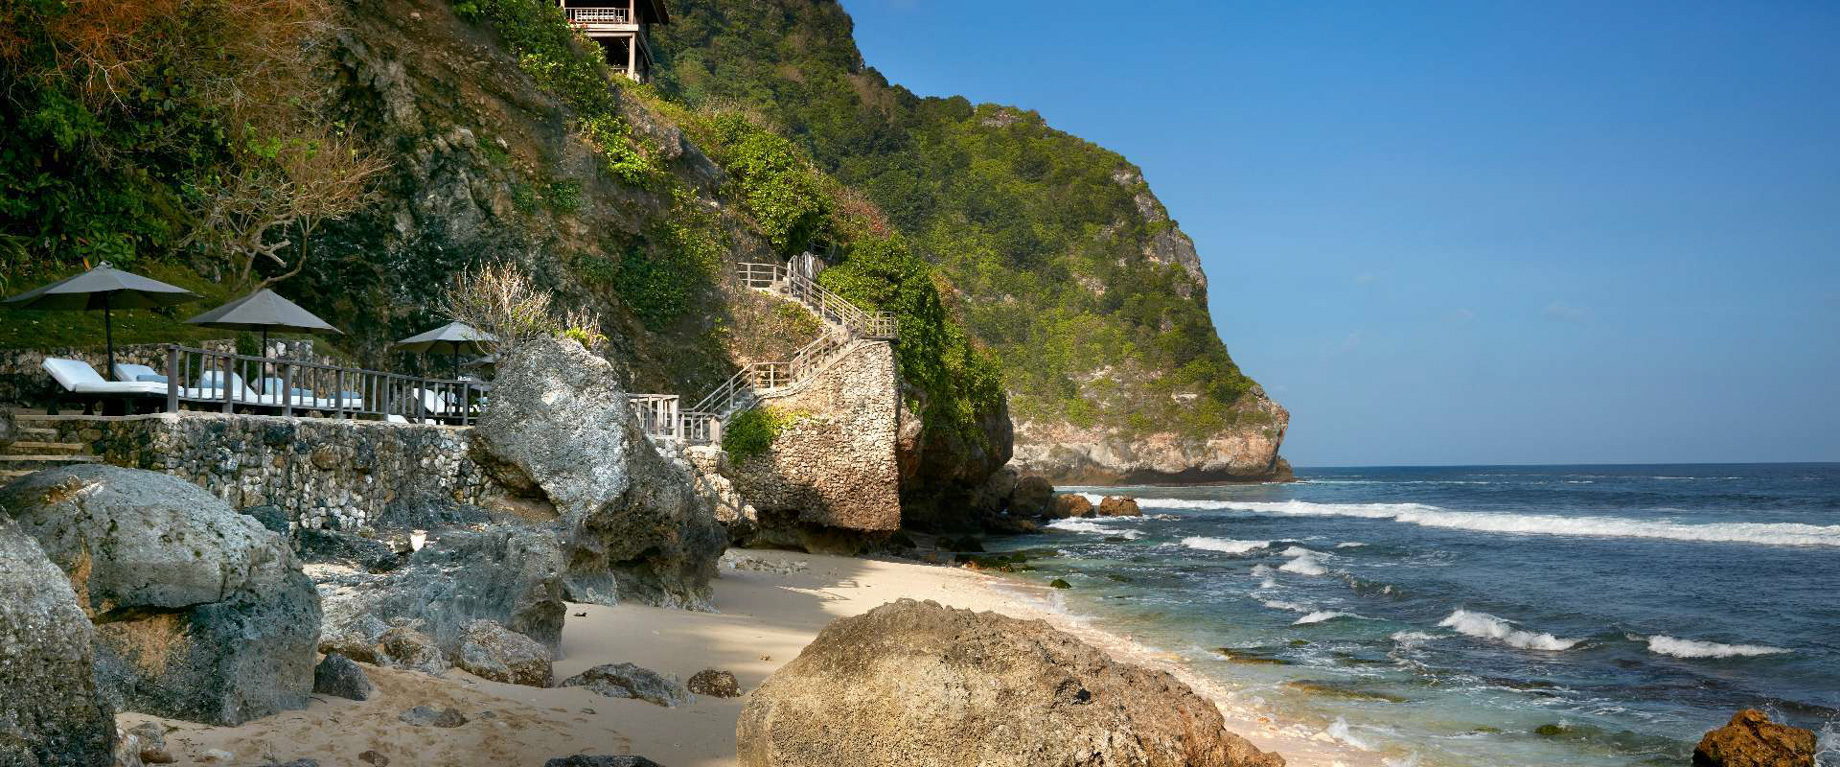 Bvlgari Resort Bali – Uluwatu, Bali, Indonesia – Private Beach